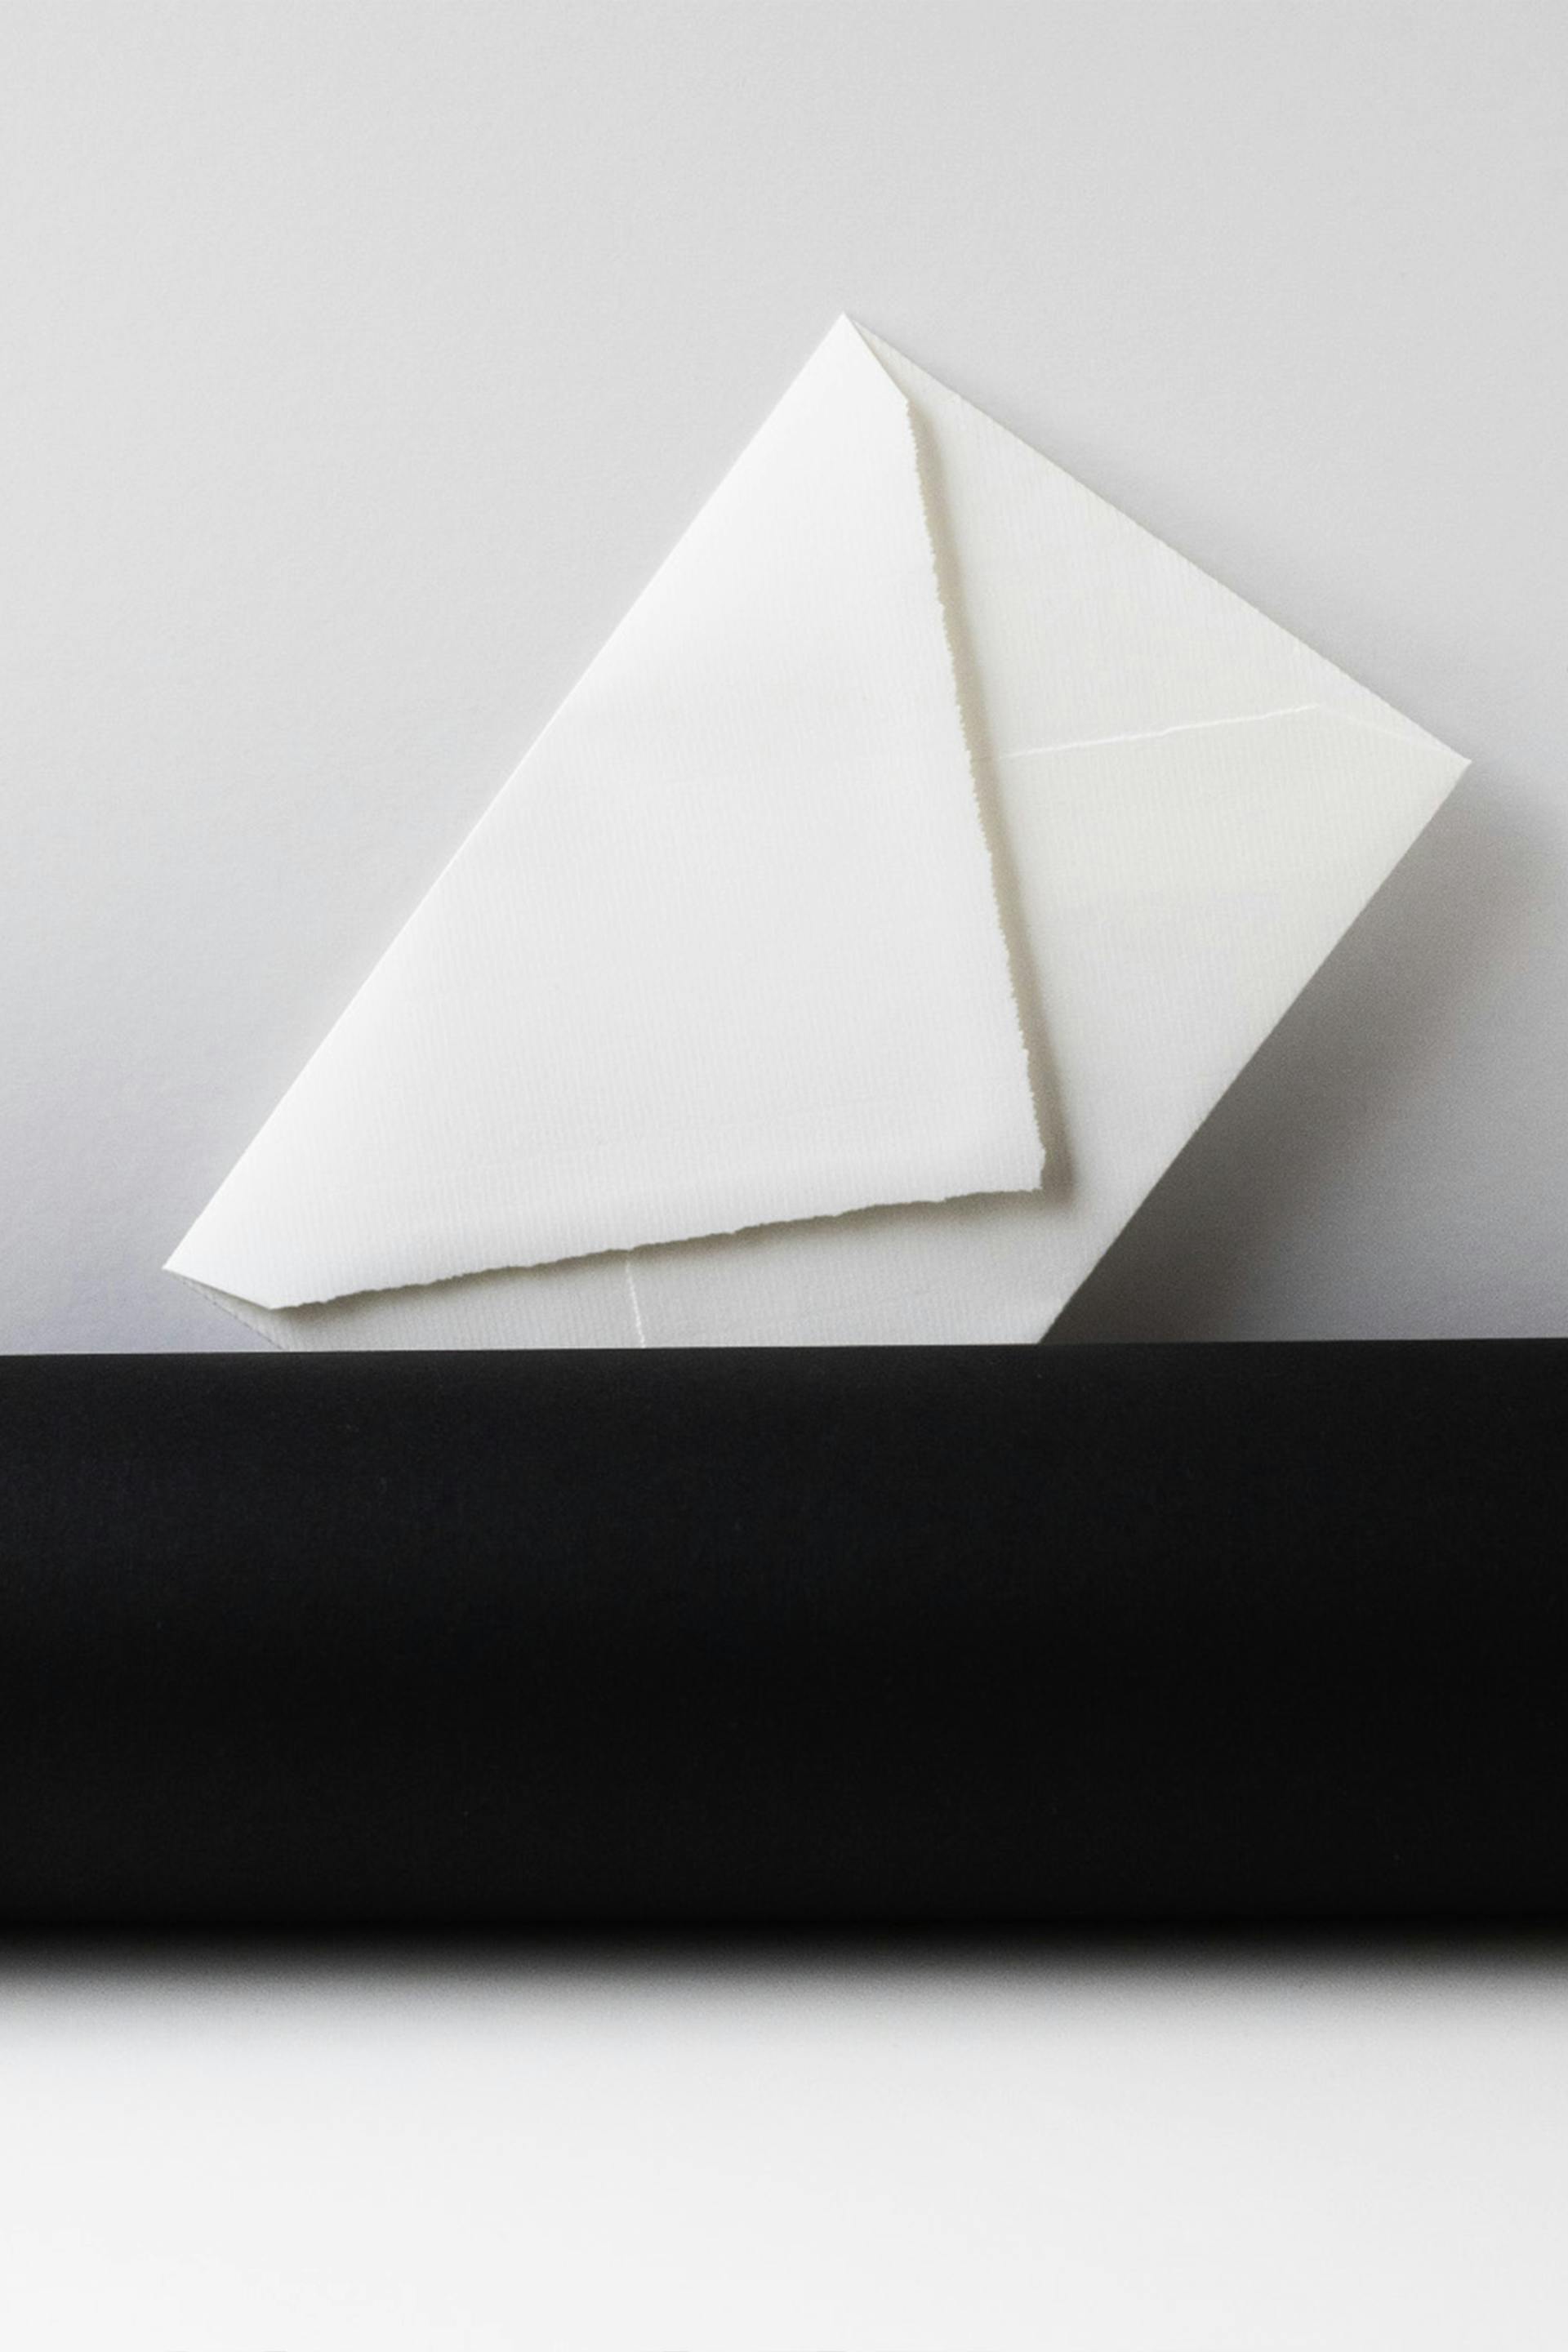 A white envelope | Source: Pexels